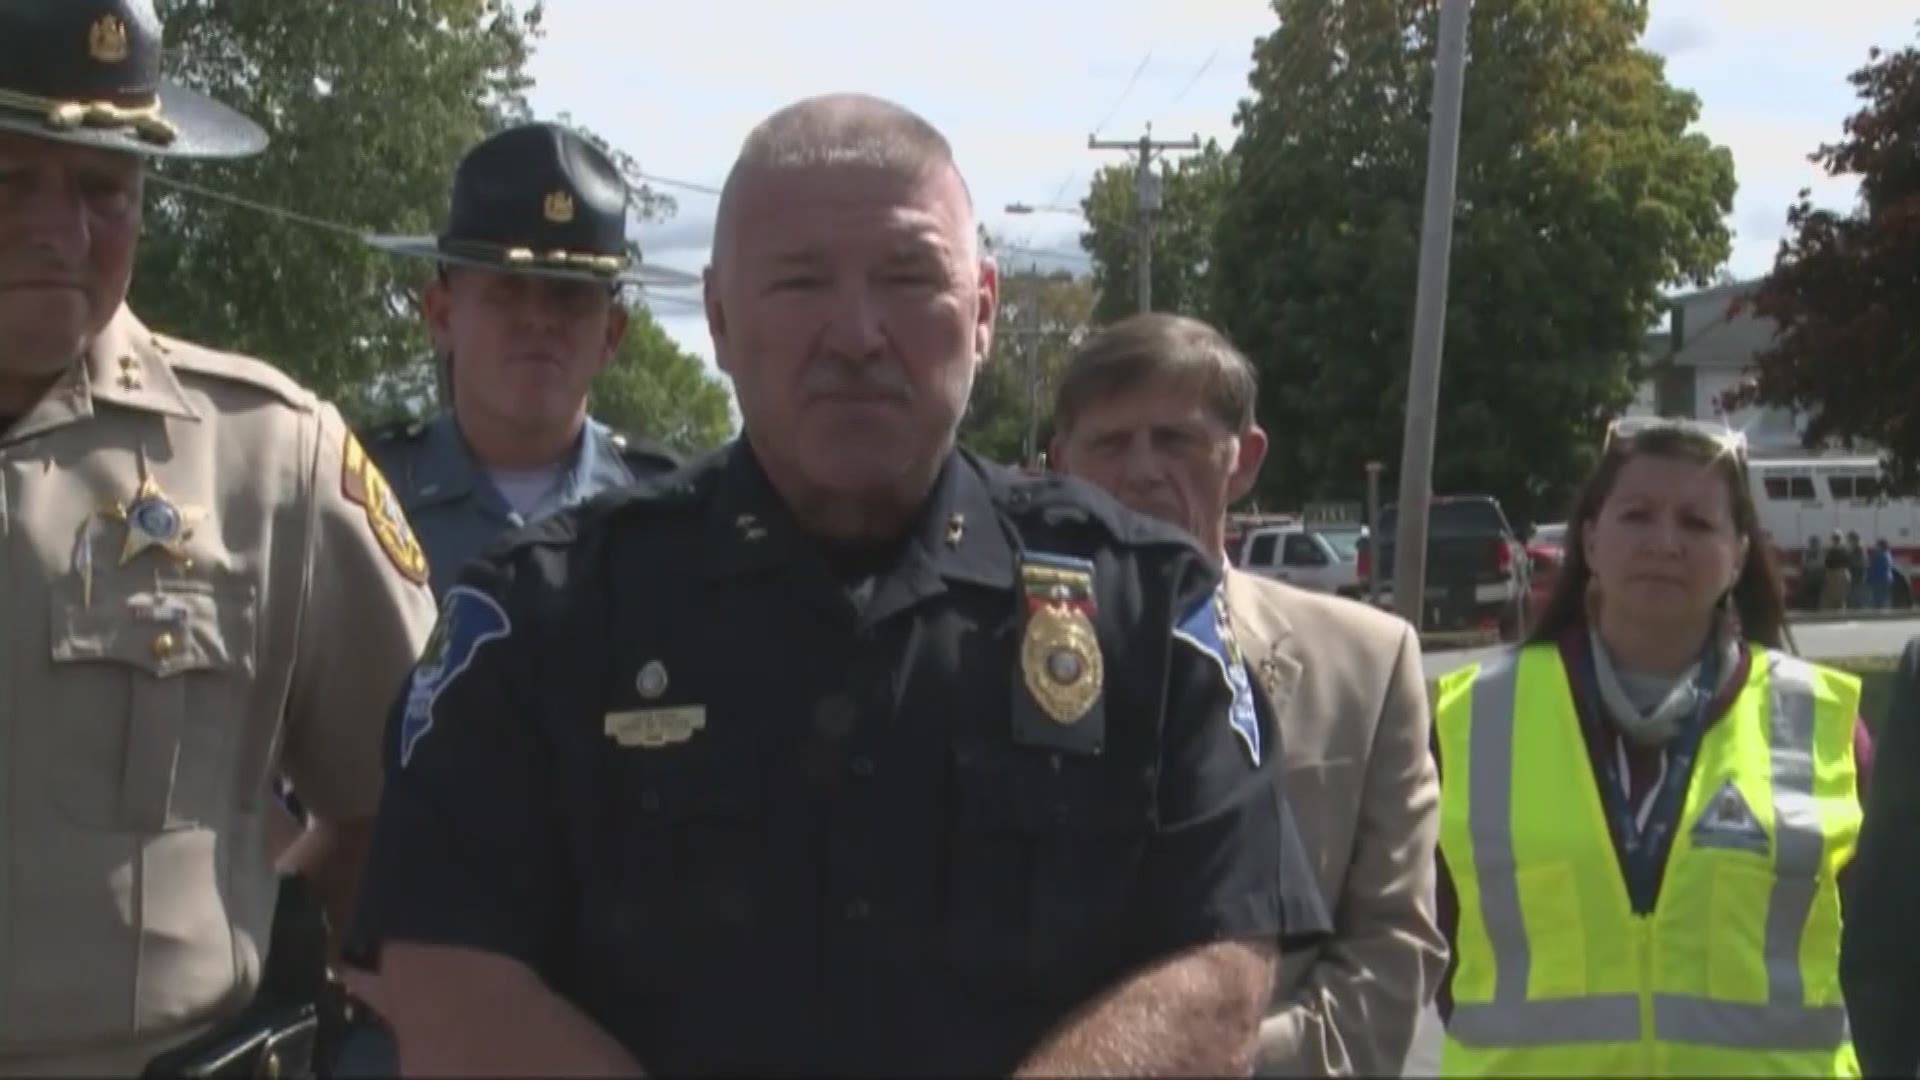 Farmington explosion news conference: Police Chief Jack Peck